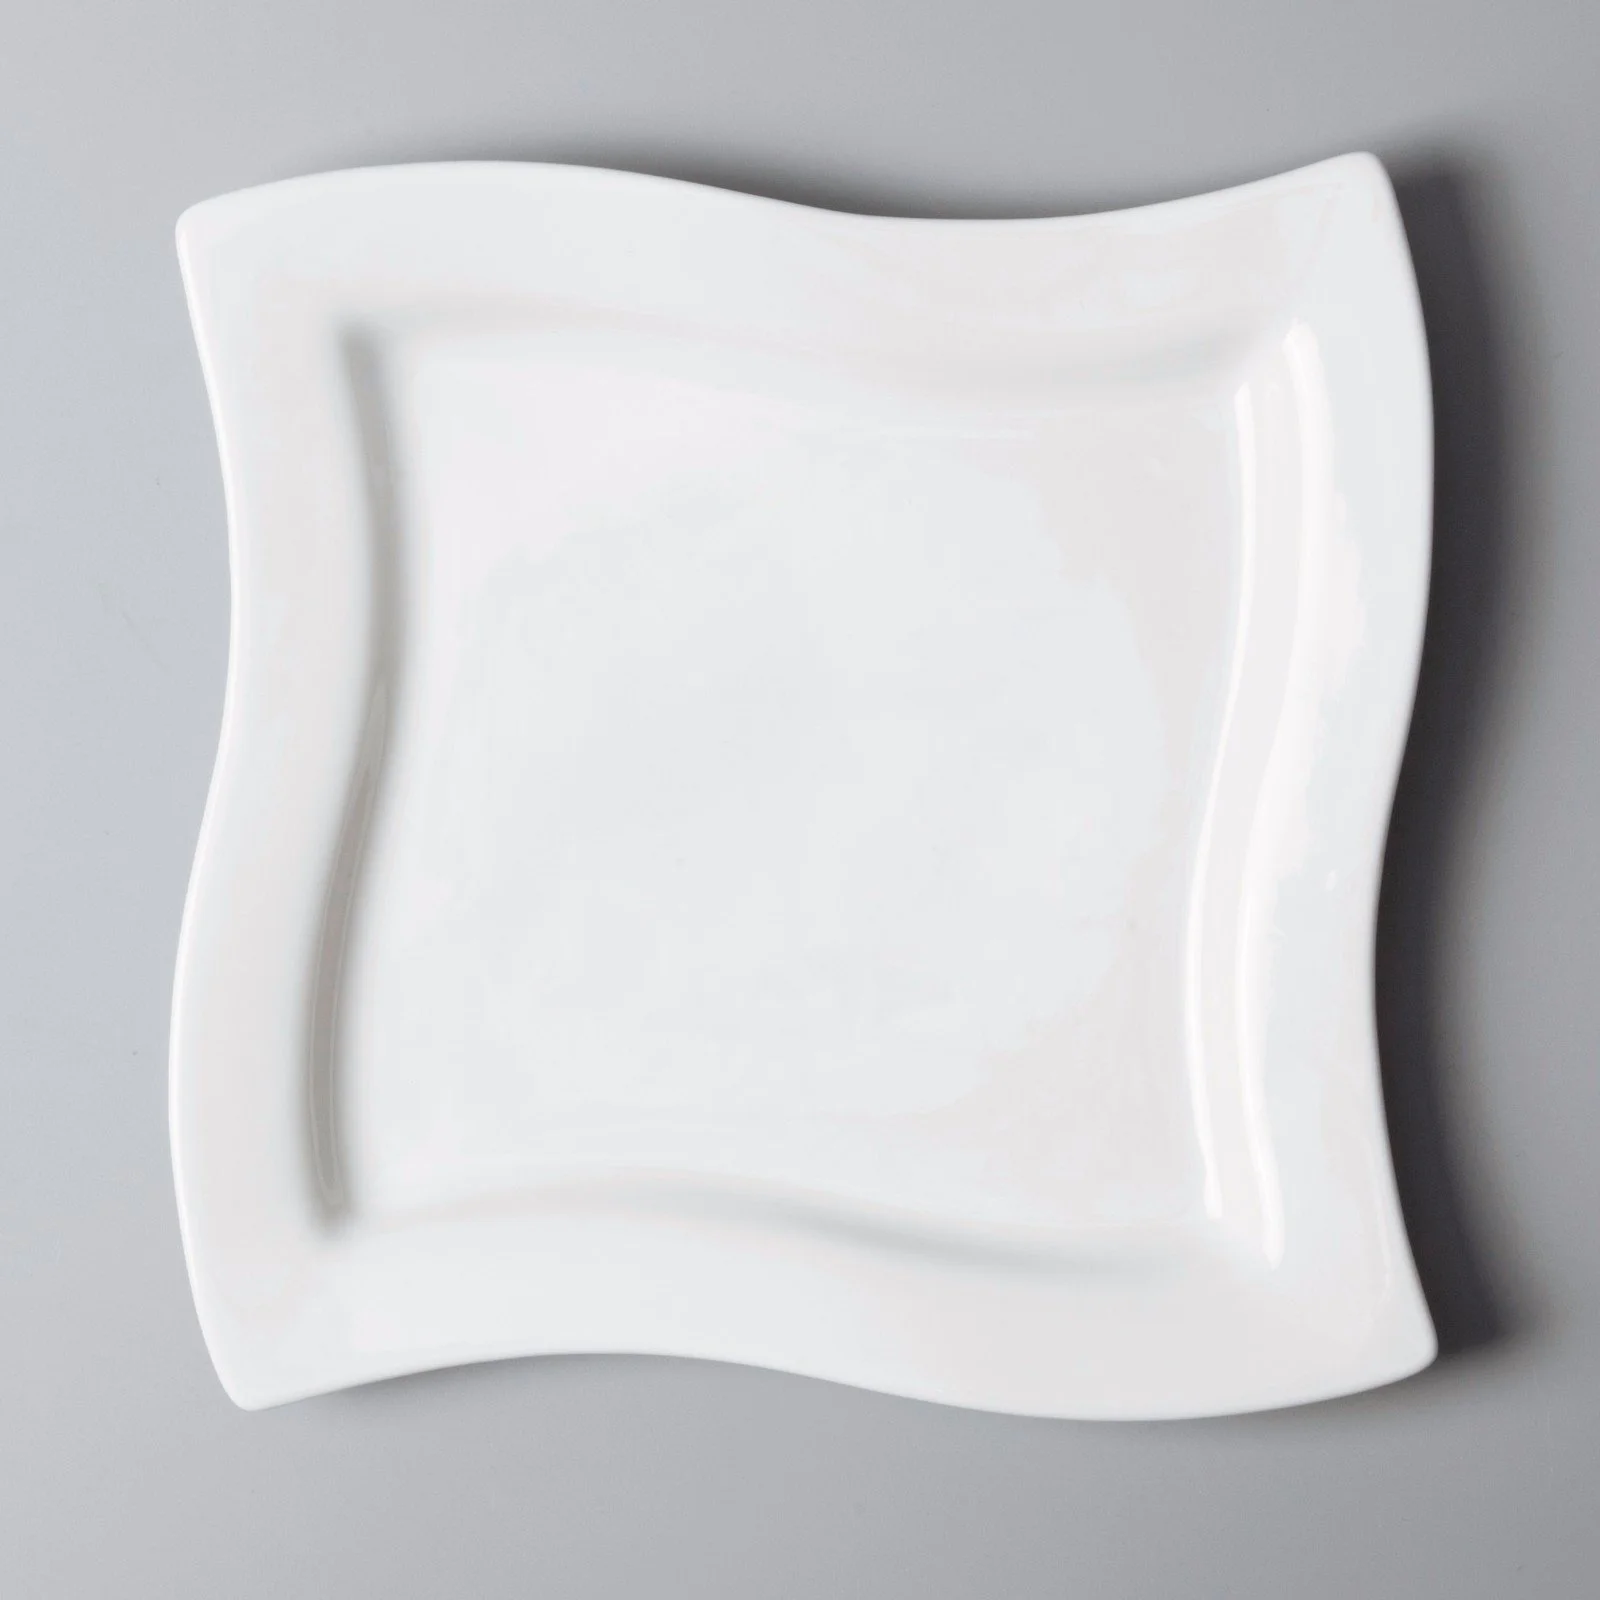 white porcelain tableware porcelain german two eight ceramics wang company